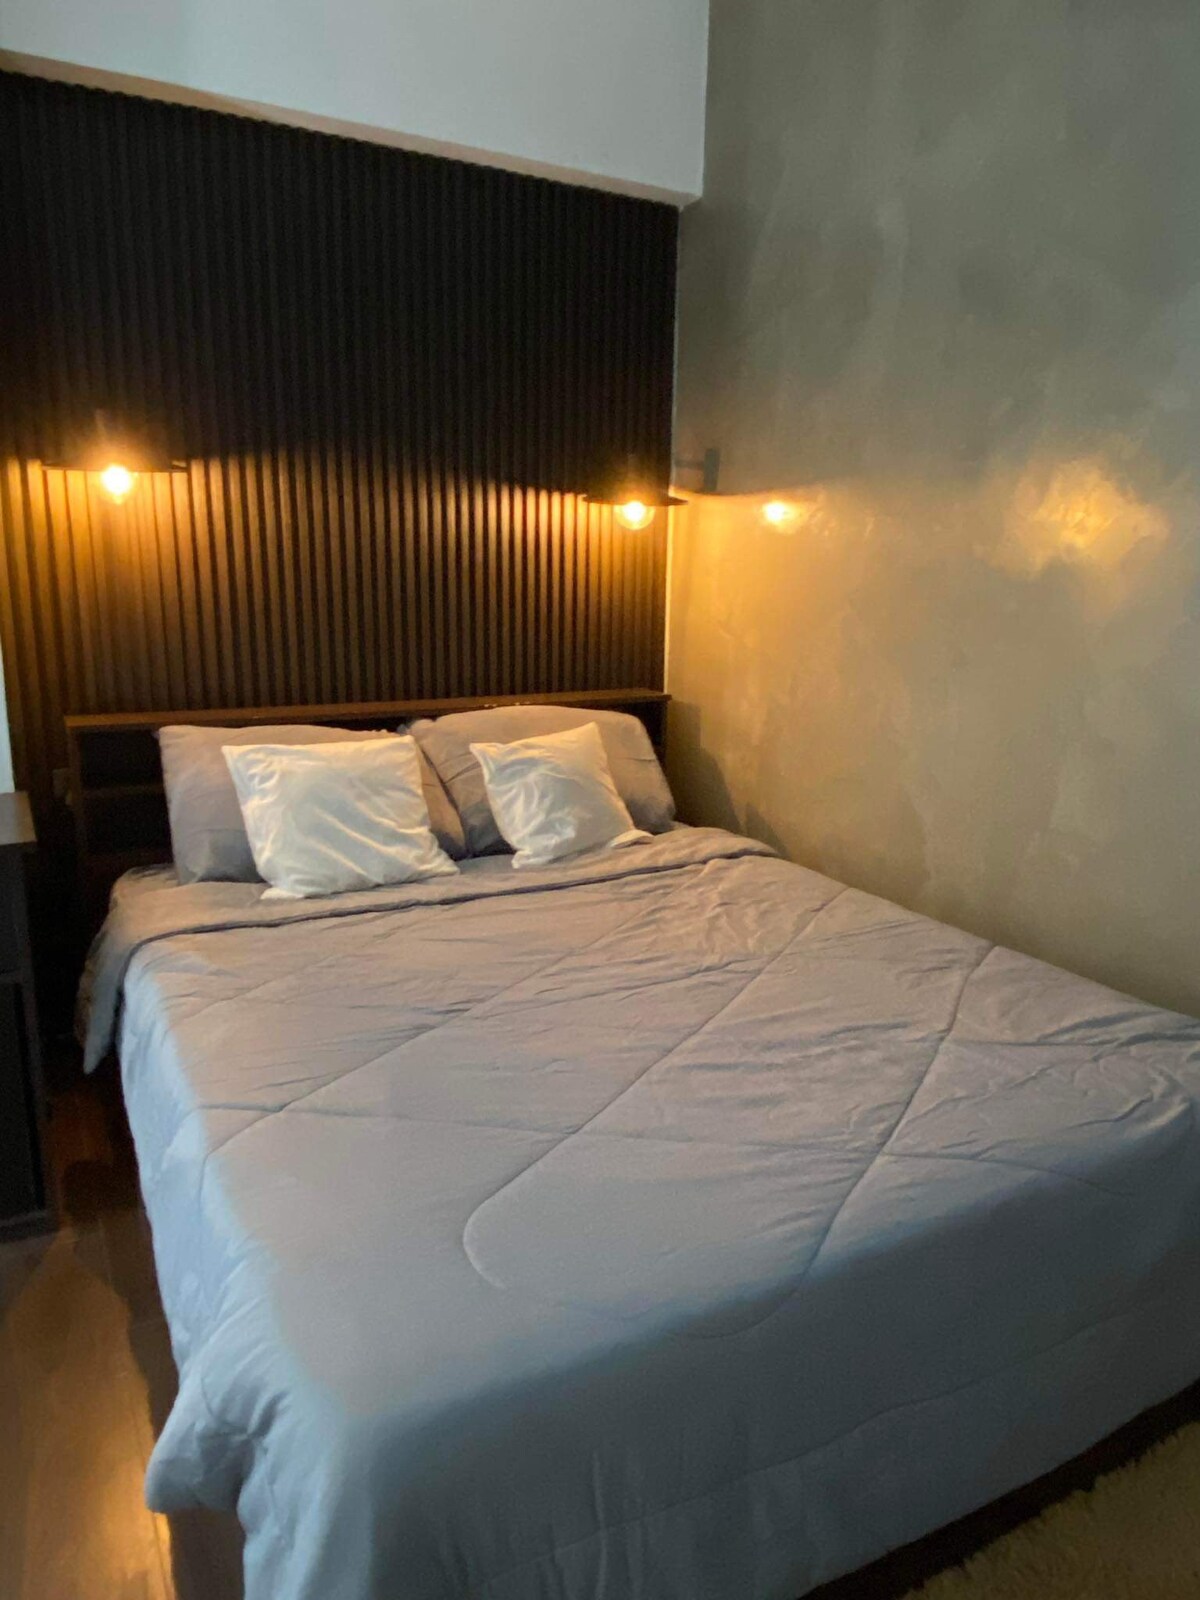 Aeon Urban Luxe 1-Bedroom near Abreeza w/ Parking